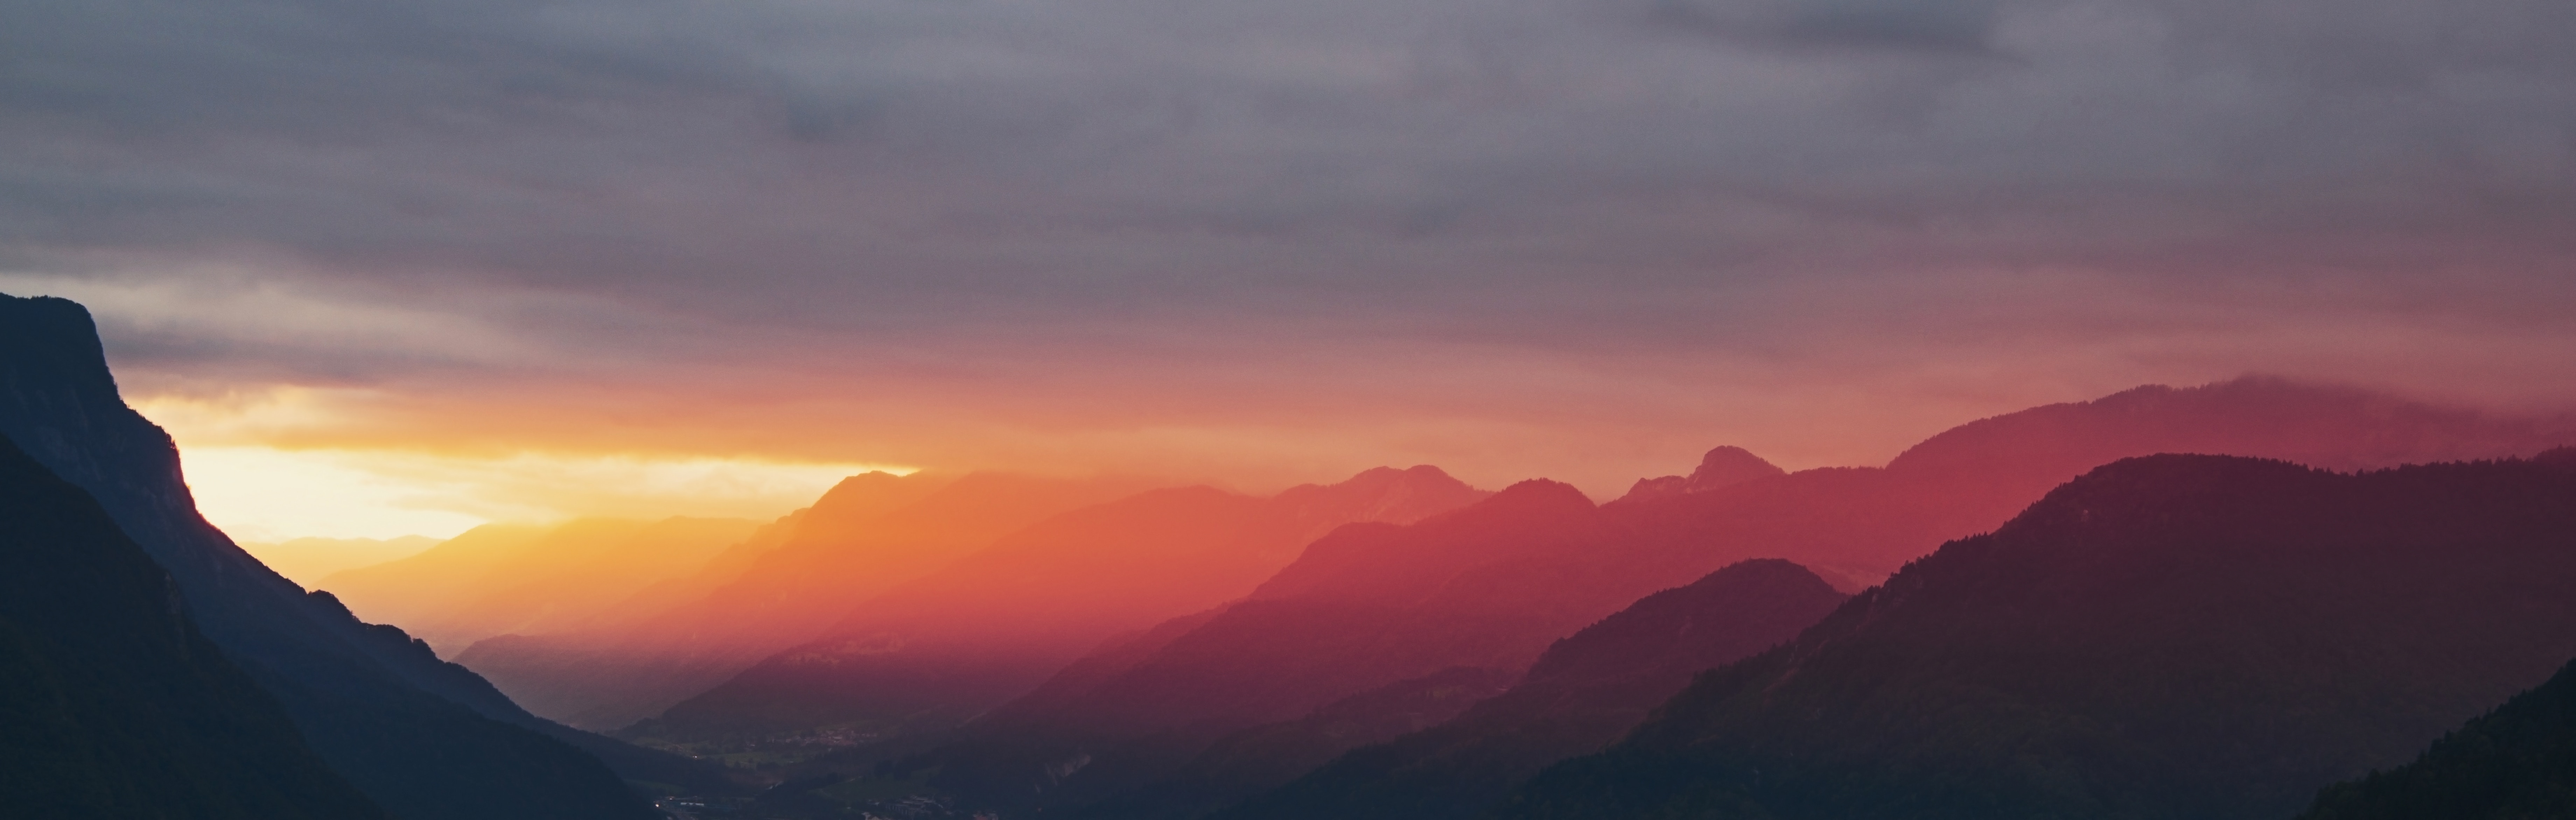 sunrise beside a mountain ridge red hues